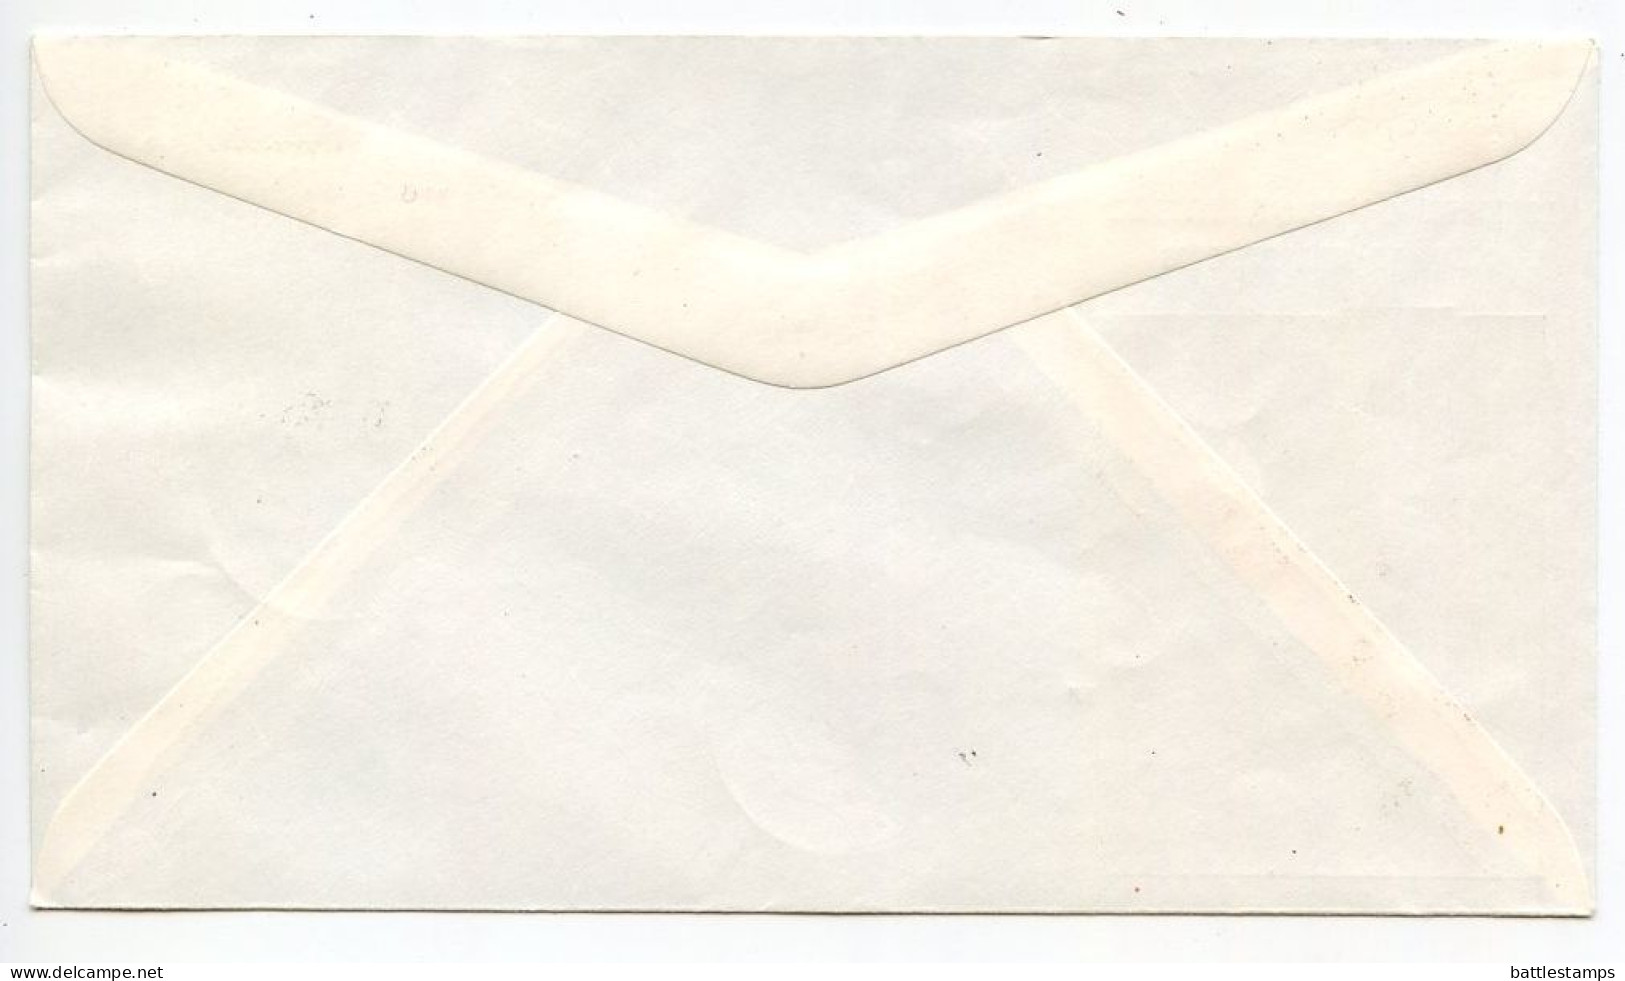 Saar 1959 Commemorative Cover Letzter Gültigkeitstag Für Freimarken / Last Day Of Validity For Postage Stamps - Briefe U. Dokumente